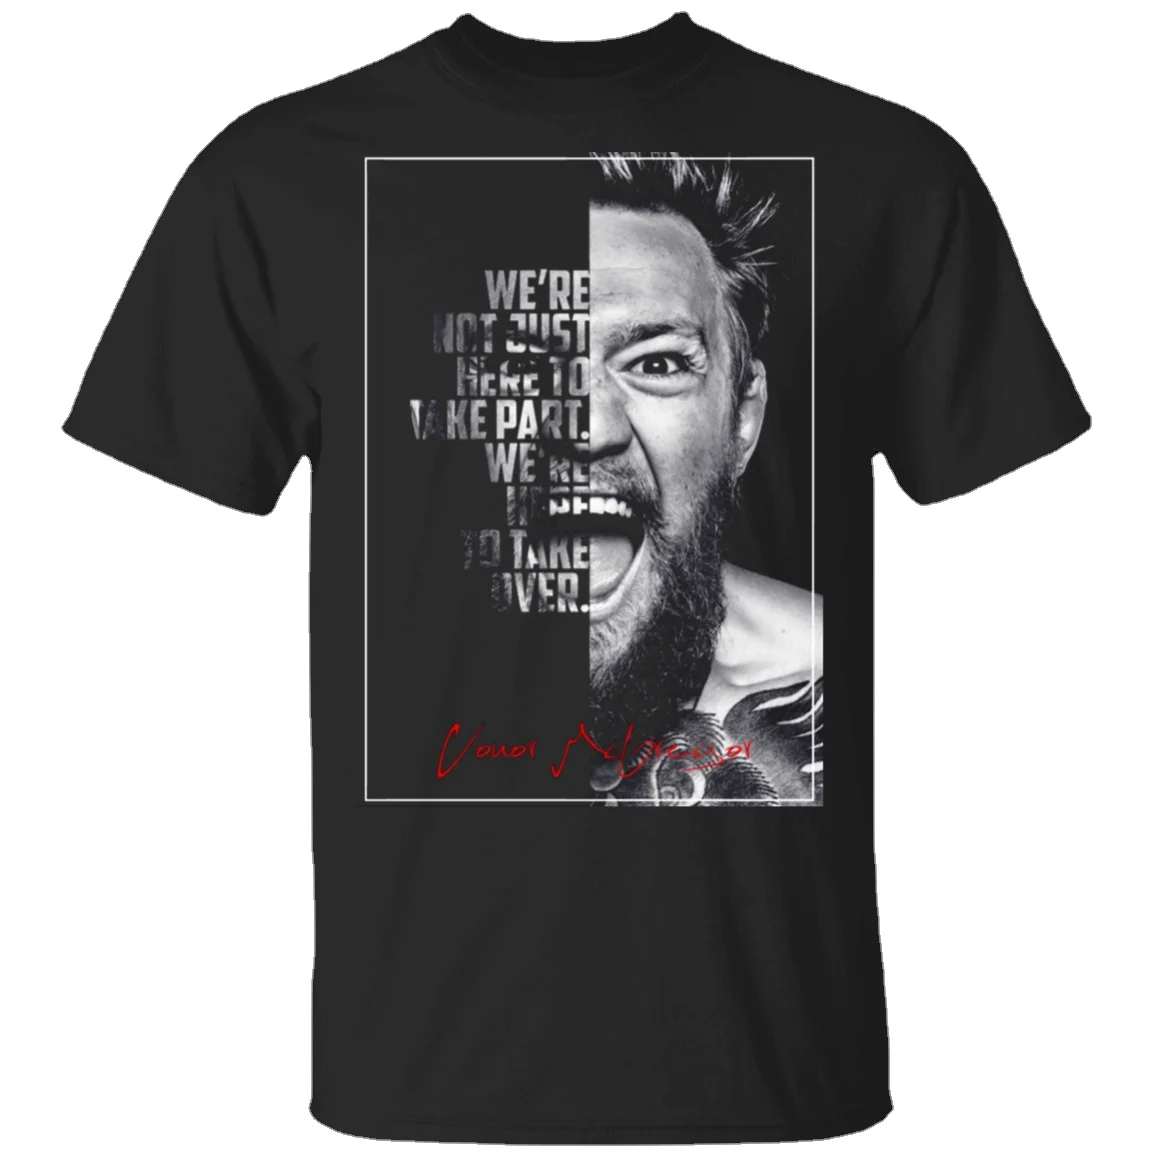 

Conor McGregor Ultimate 2019 Limited Black T-Shirt S-XXXL